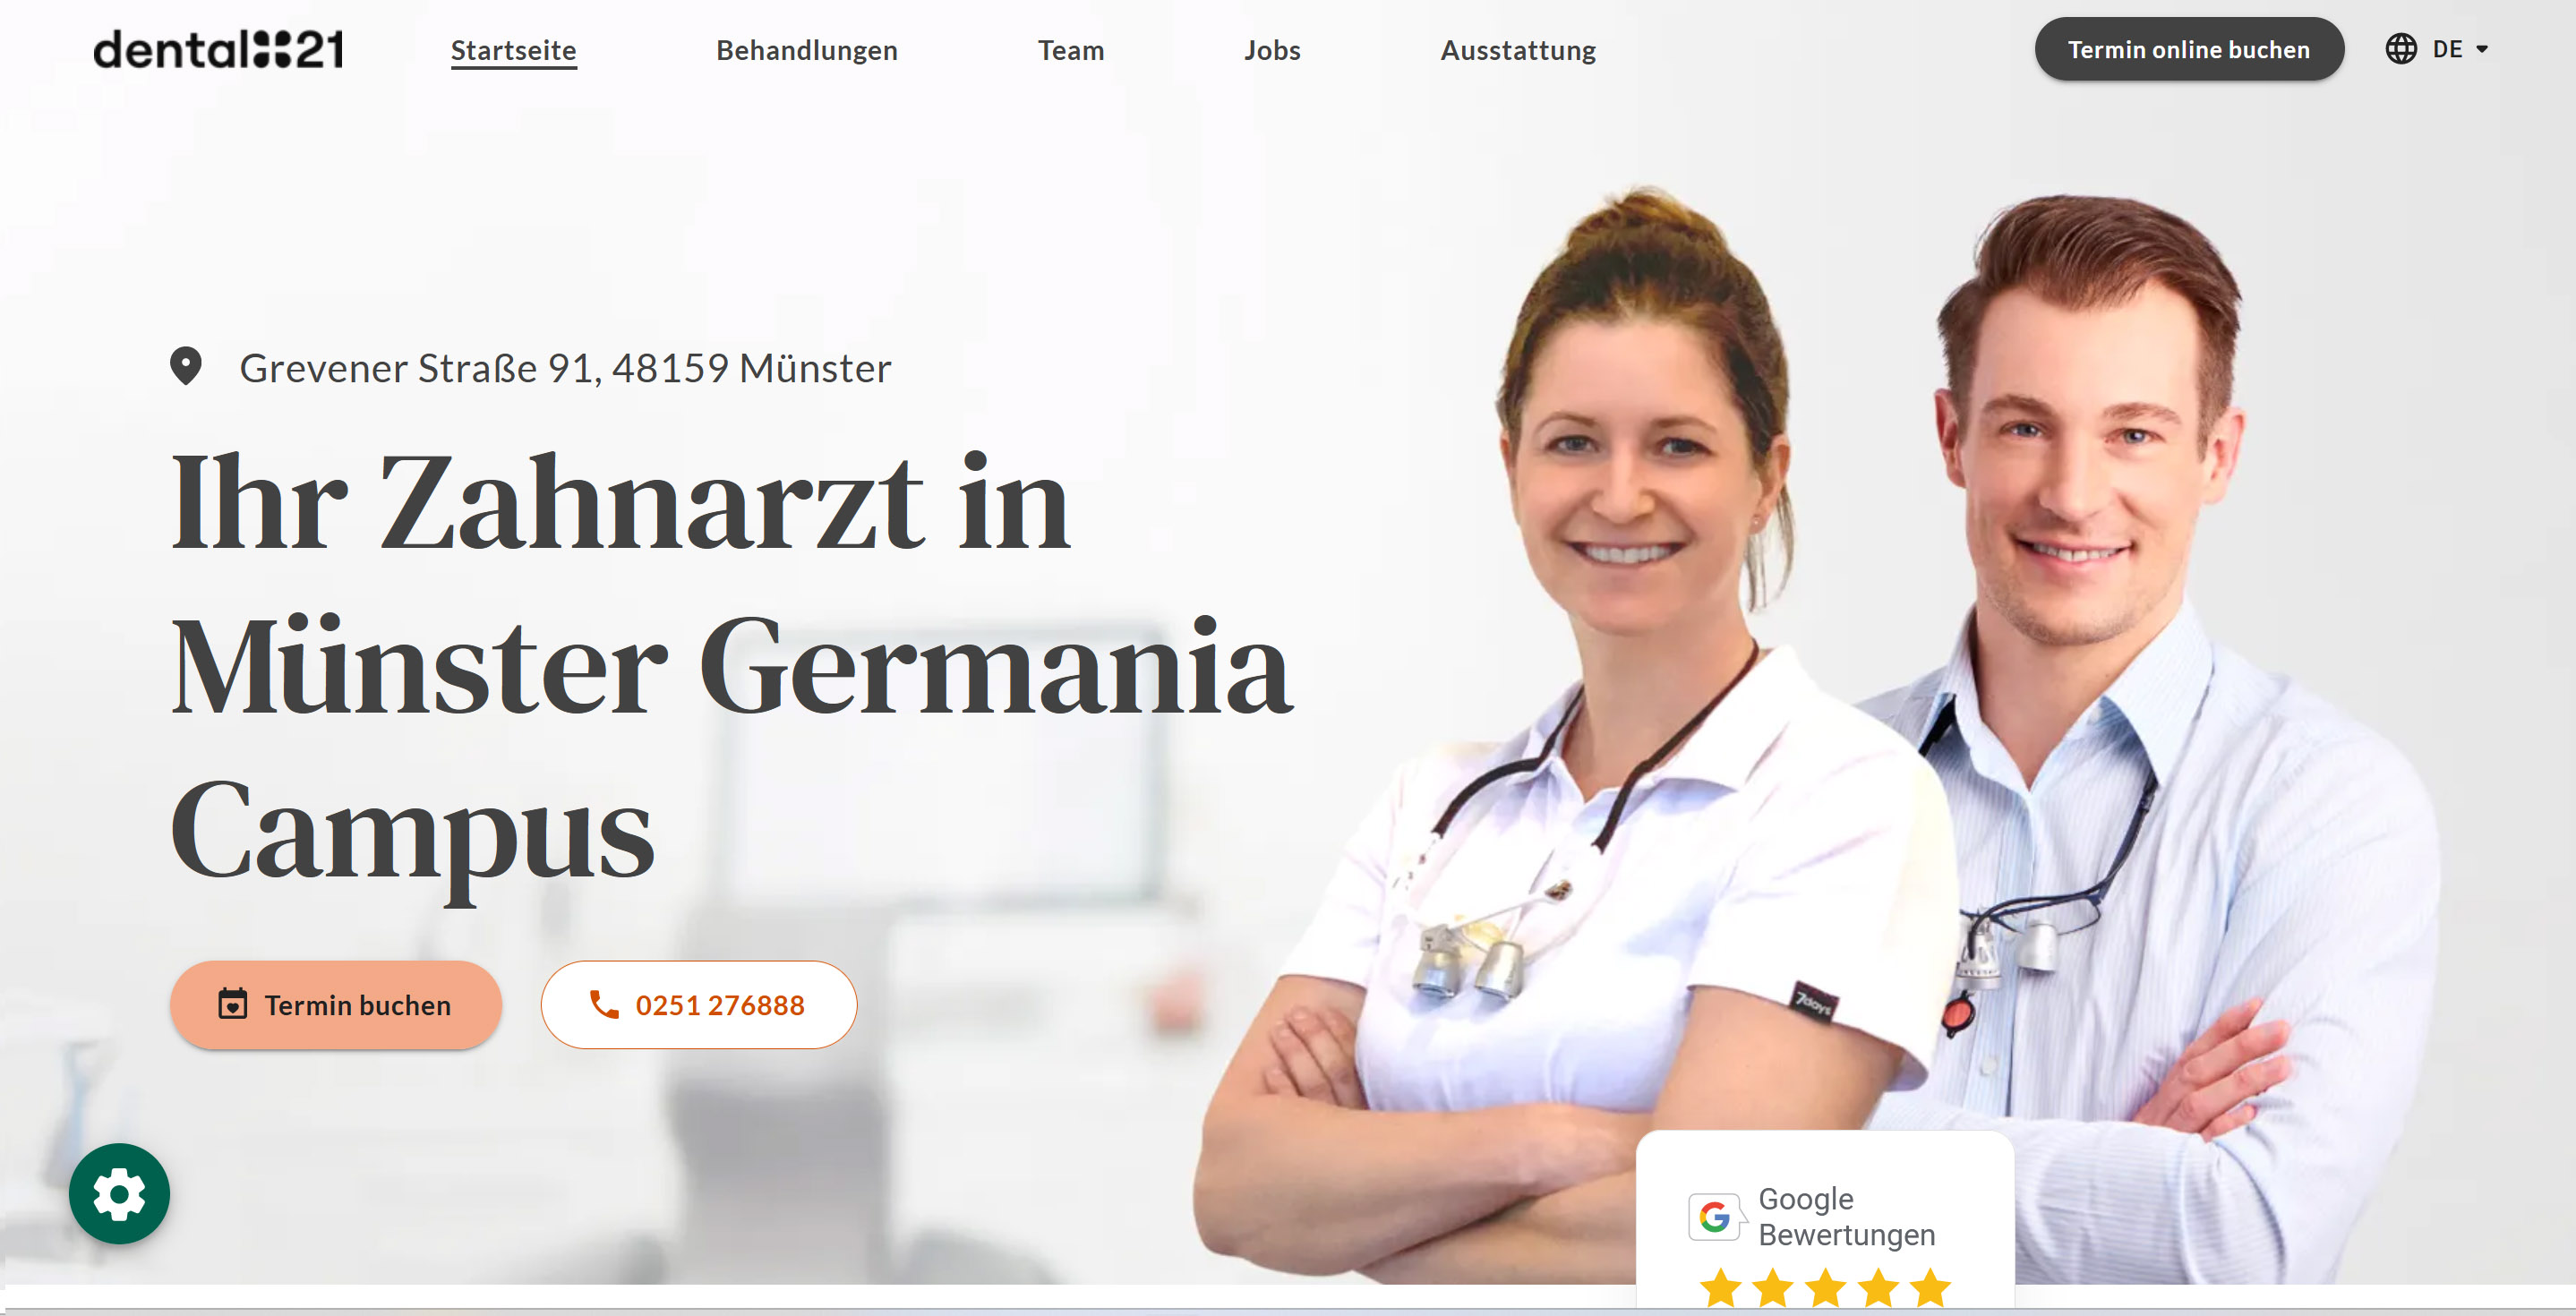 Dental21 Germania Campus <br> Dr. Eva Bormann